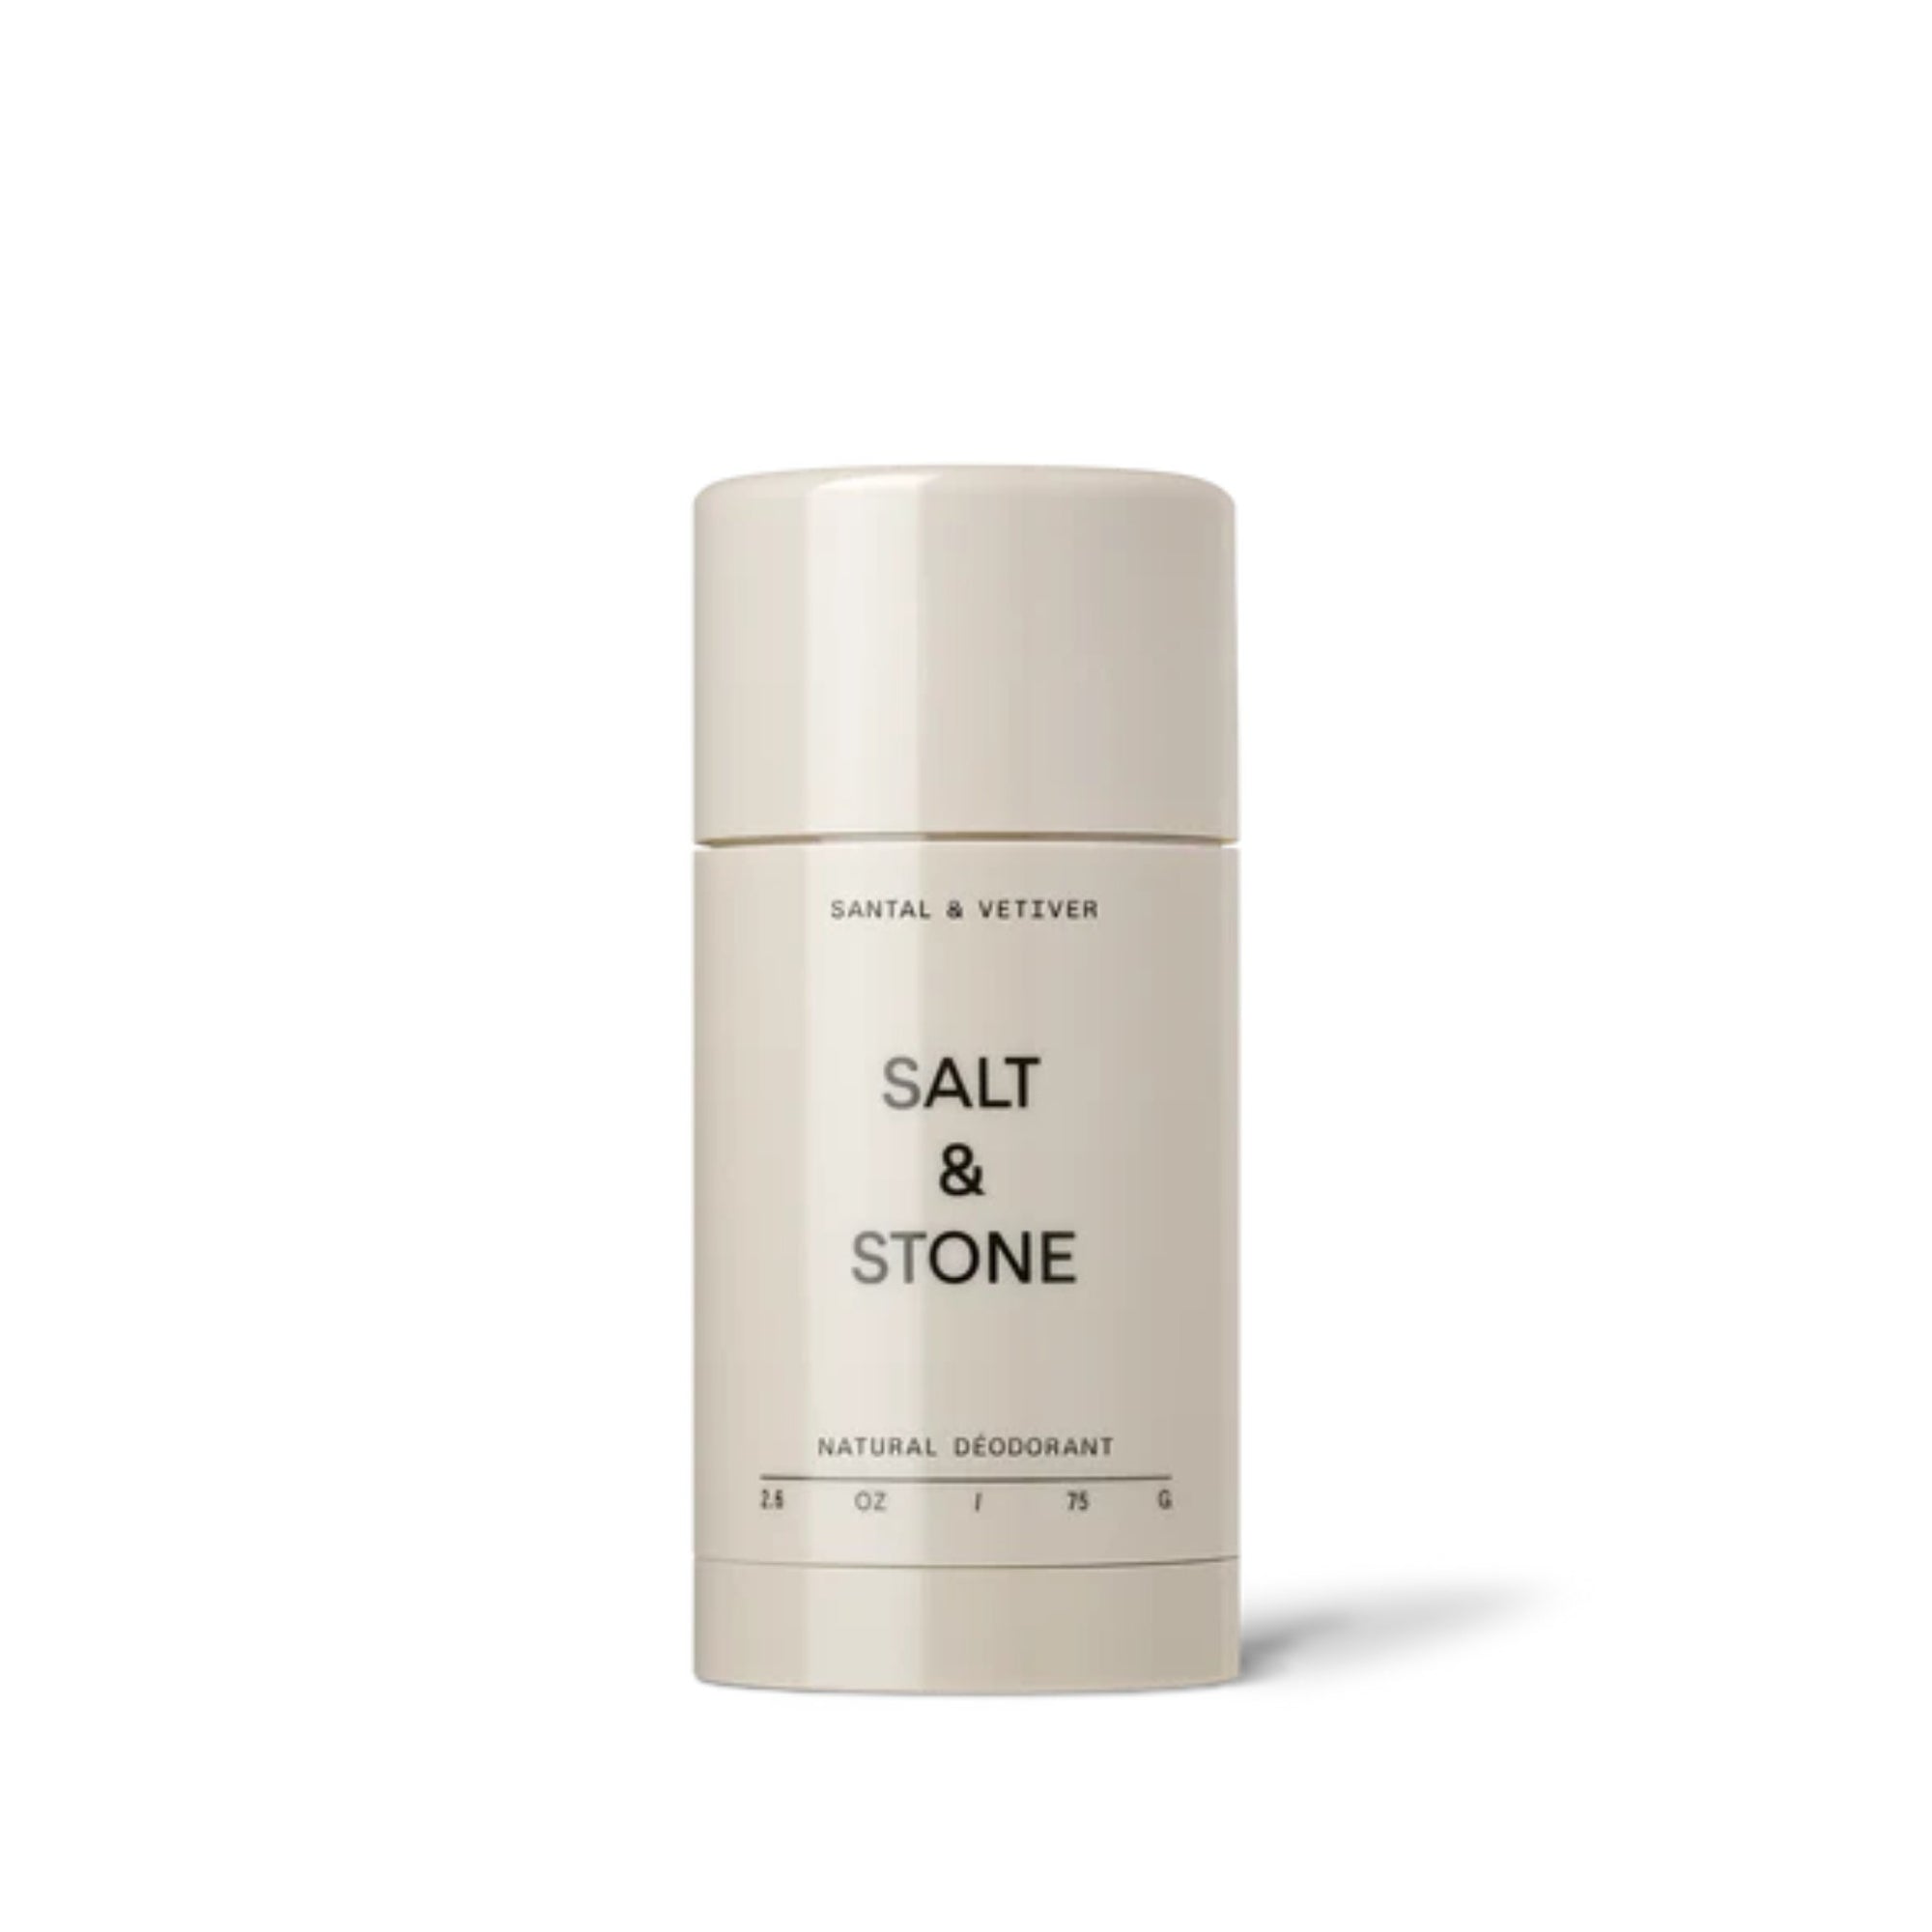 Salt & Stone - Salt & Stone Natural Deodorant - ORESTA clean beauty simplified